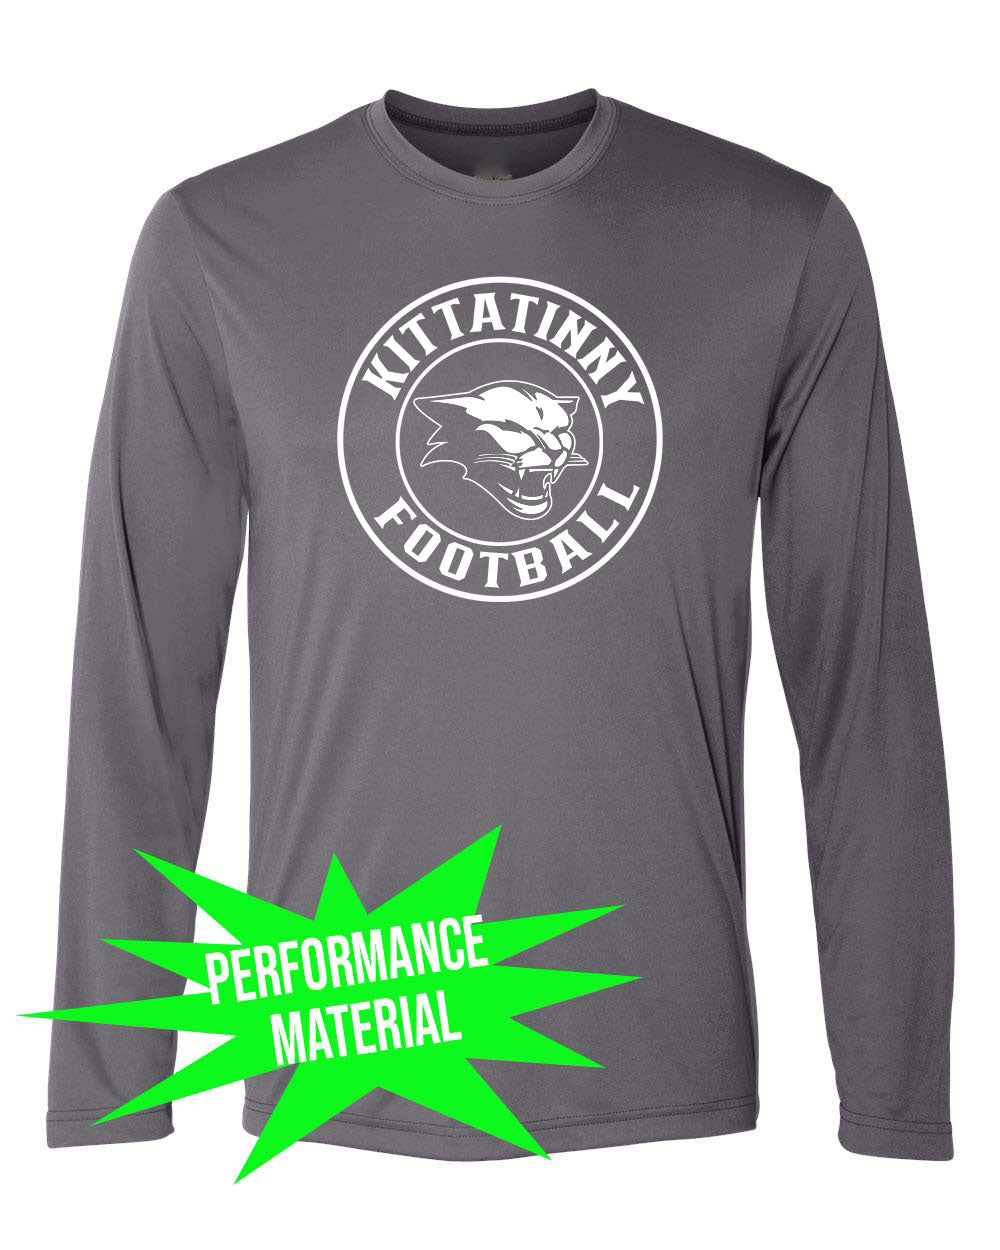 Kittatinny Football Performance Material Design 5 Long Sleeve Shirt